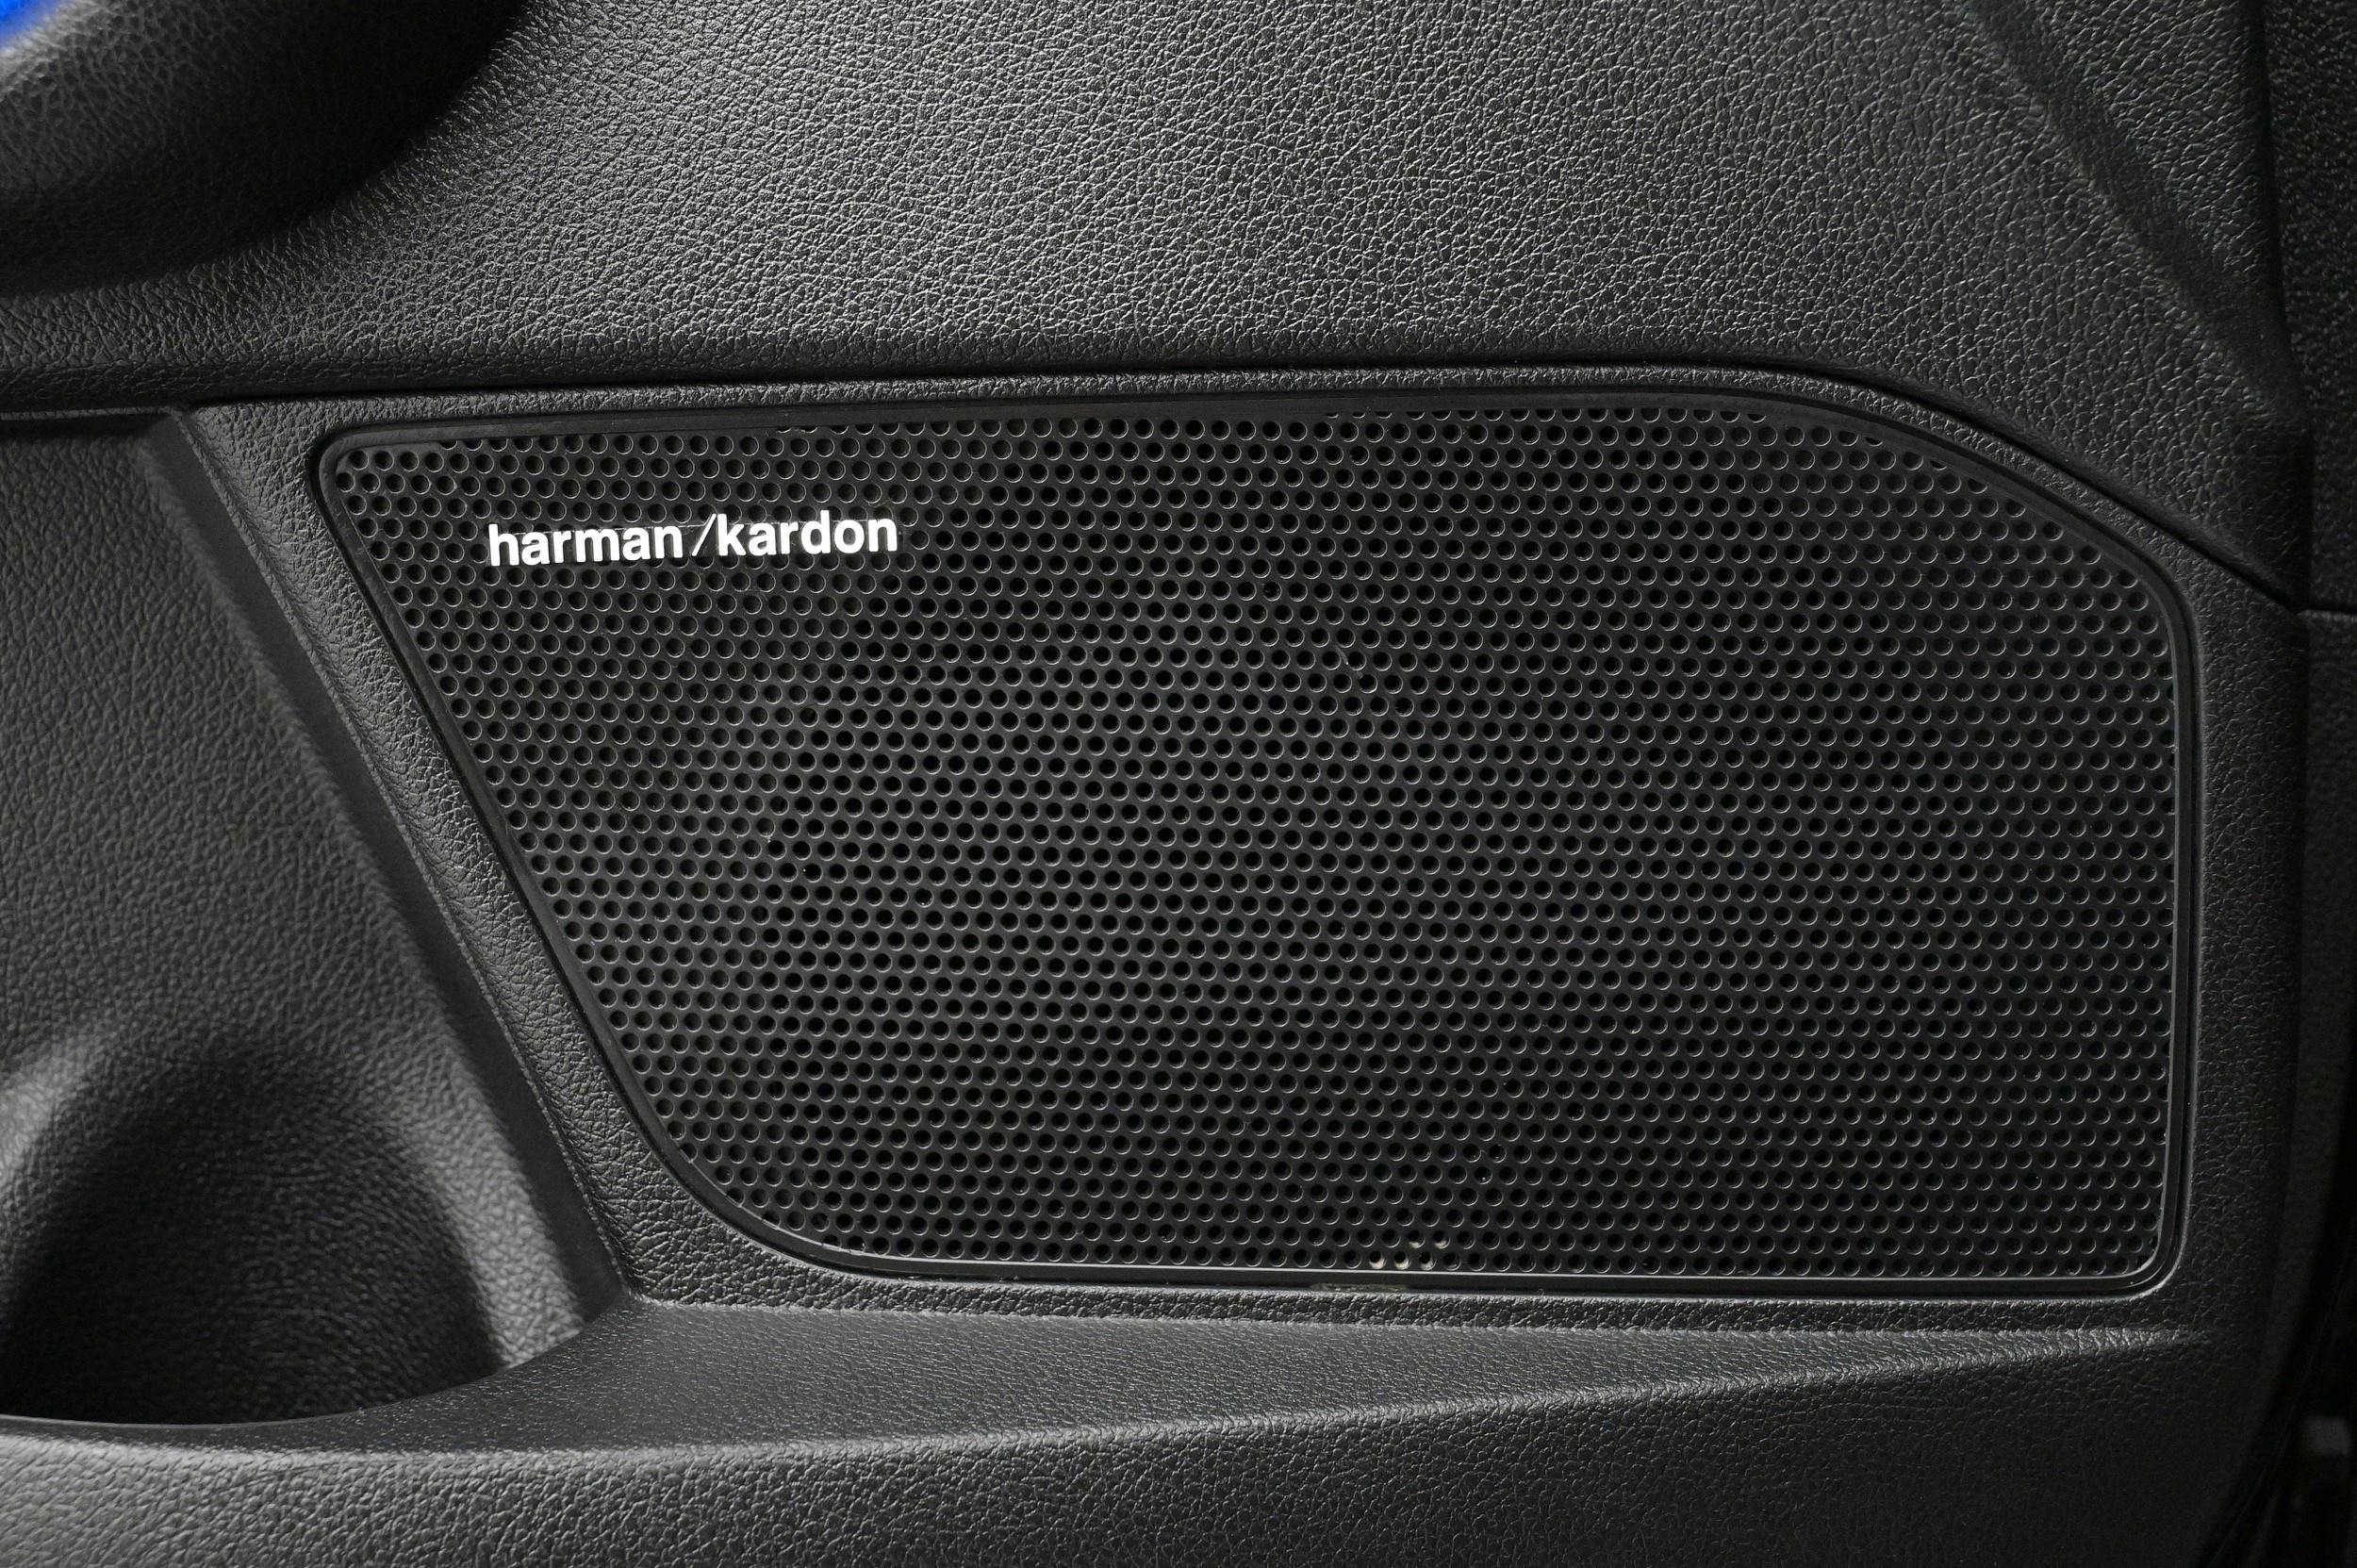 Harman/Kardon premium ljudsystem